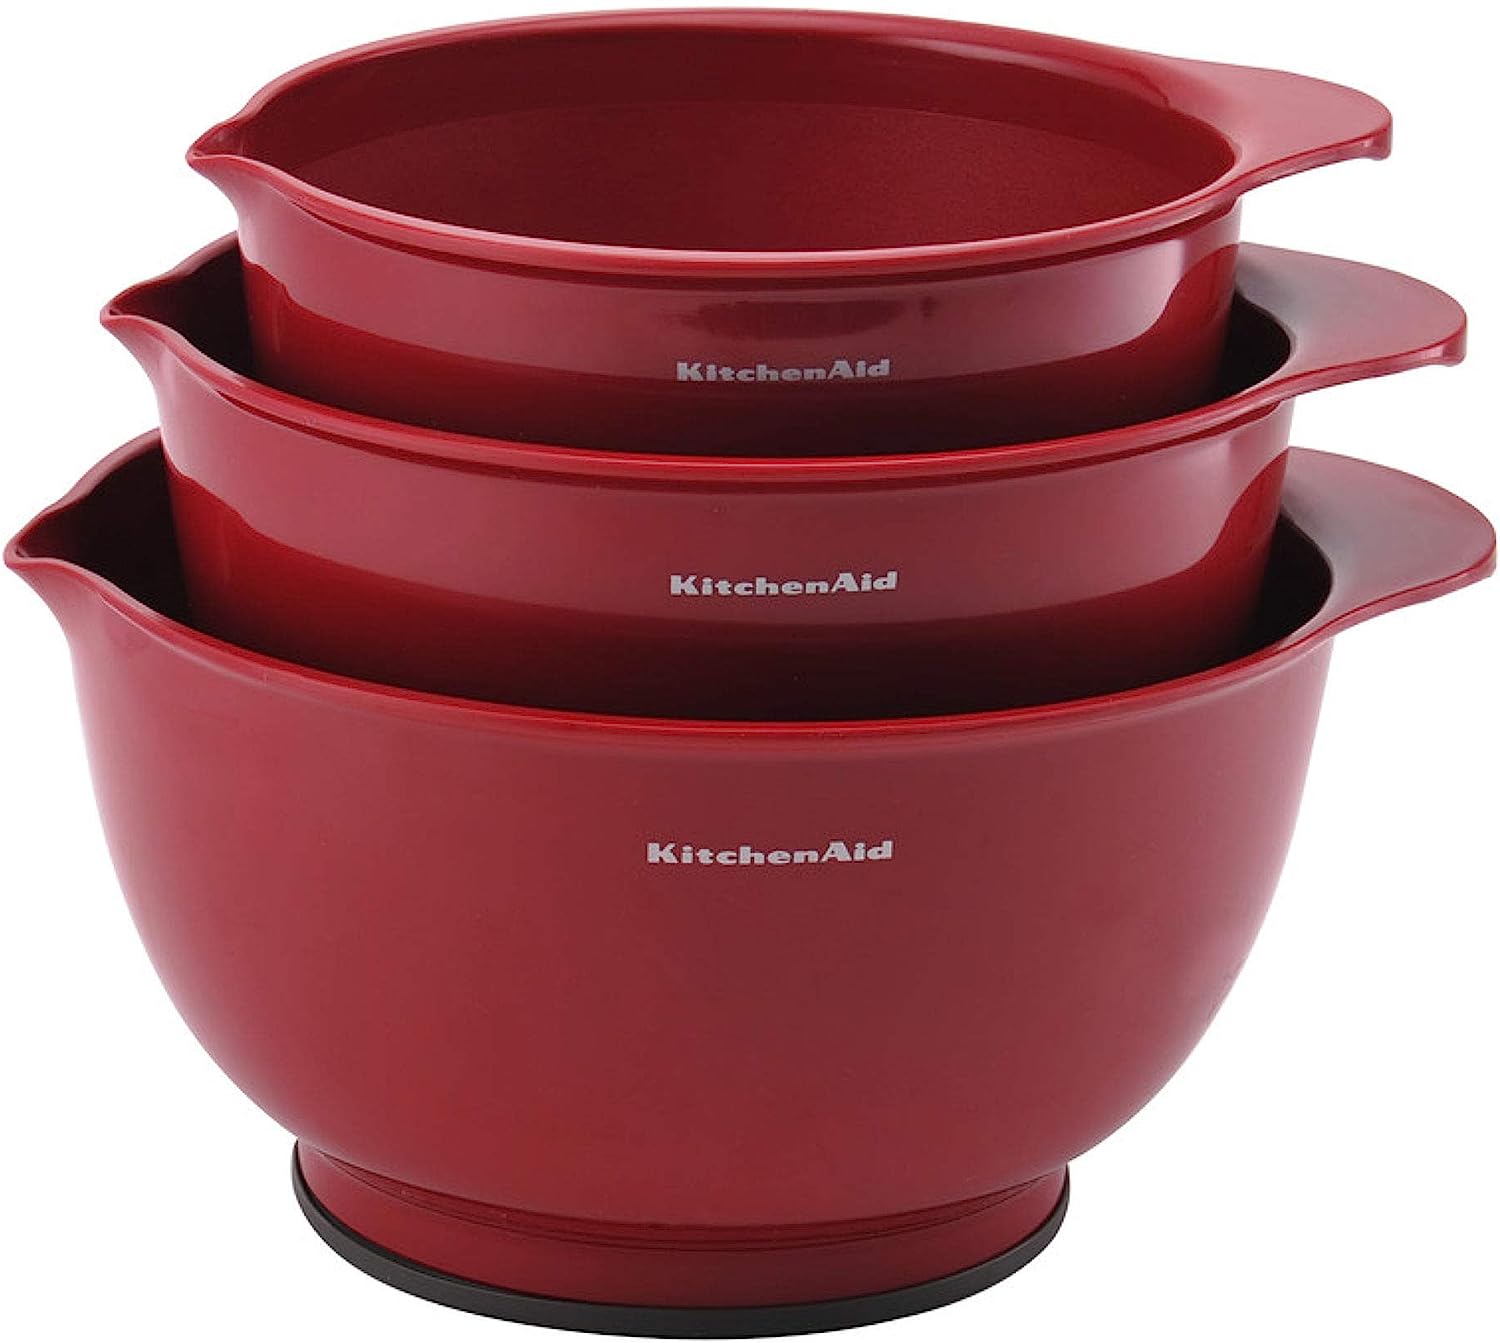 KitchenAid 5-Piece Mixing Bowl Set - Pistachio